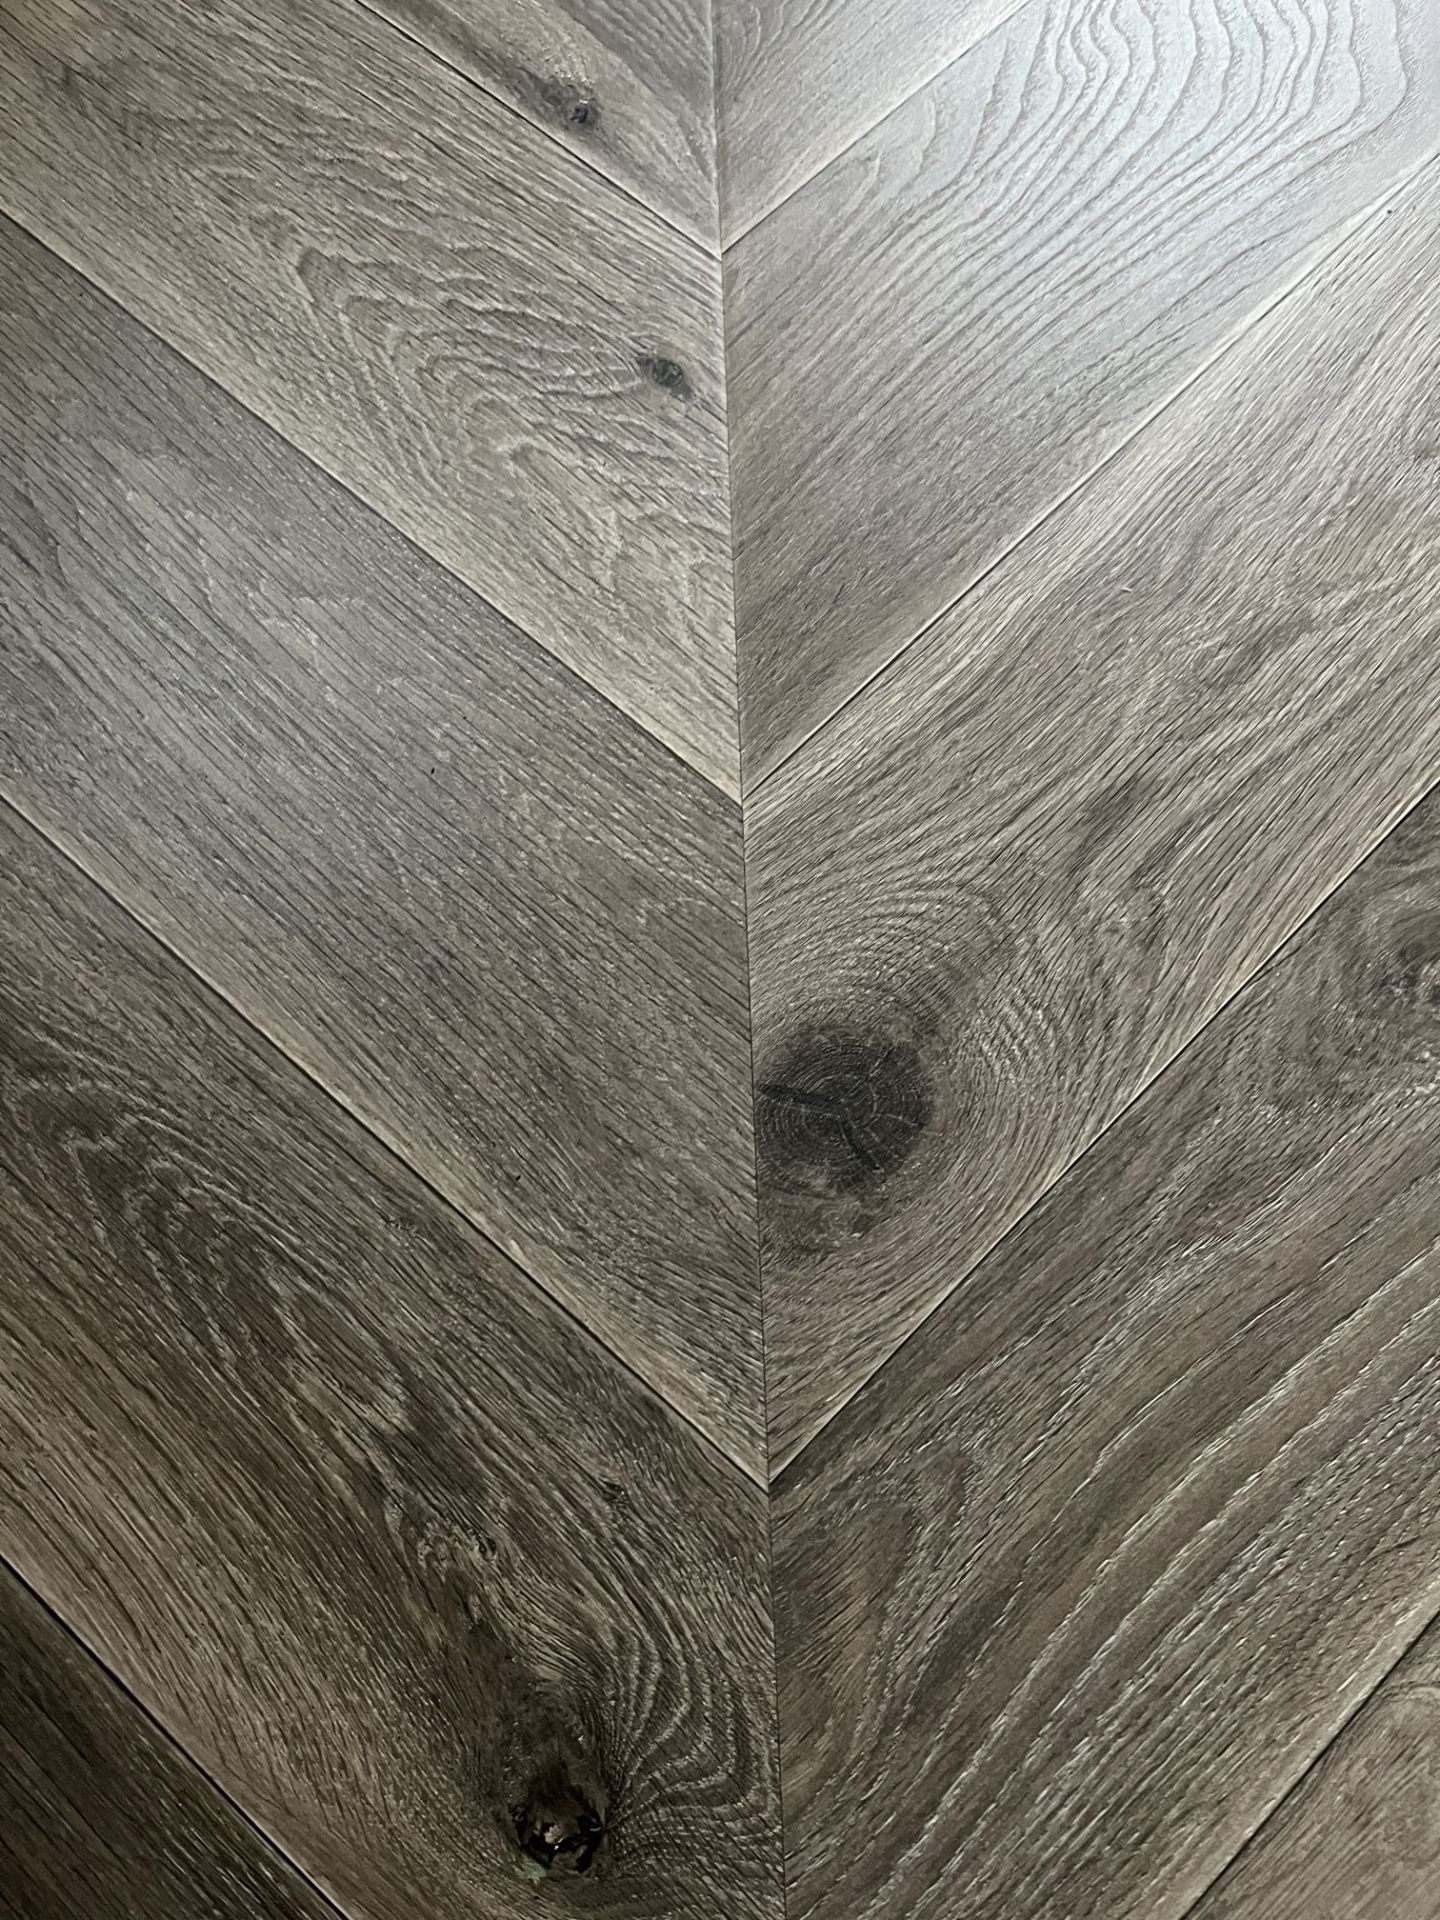 HERRINGBONE PRINT DESIGN CHEVRON Colonial Grey Oak Laminate Flooring - Image 2 of 3